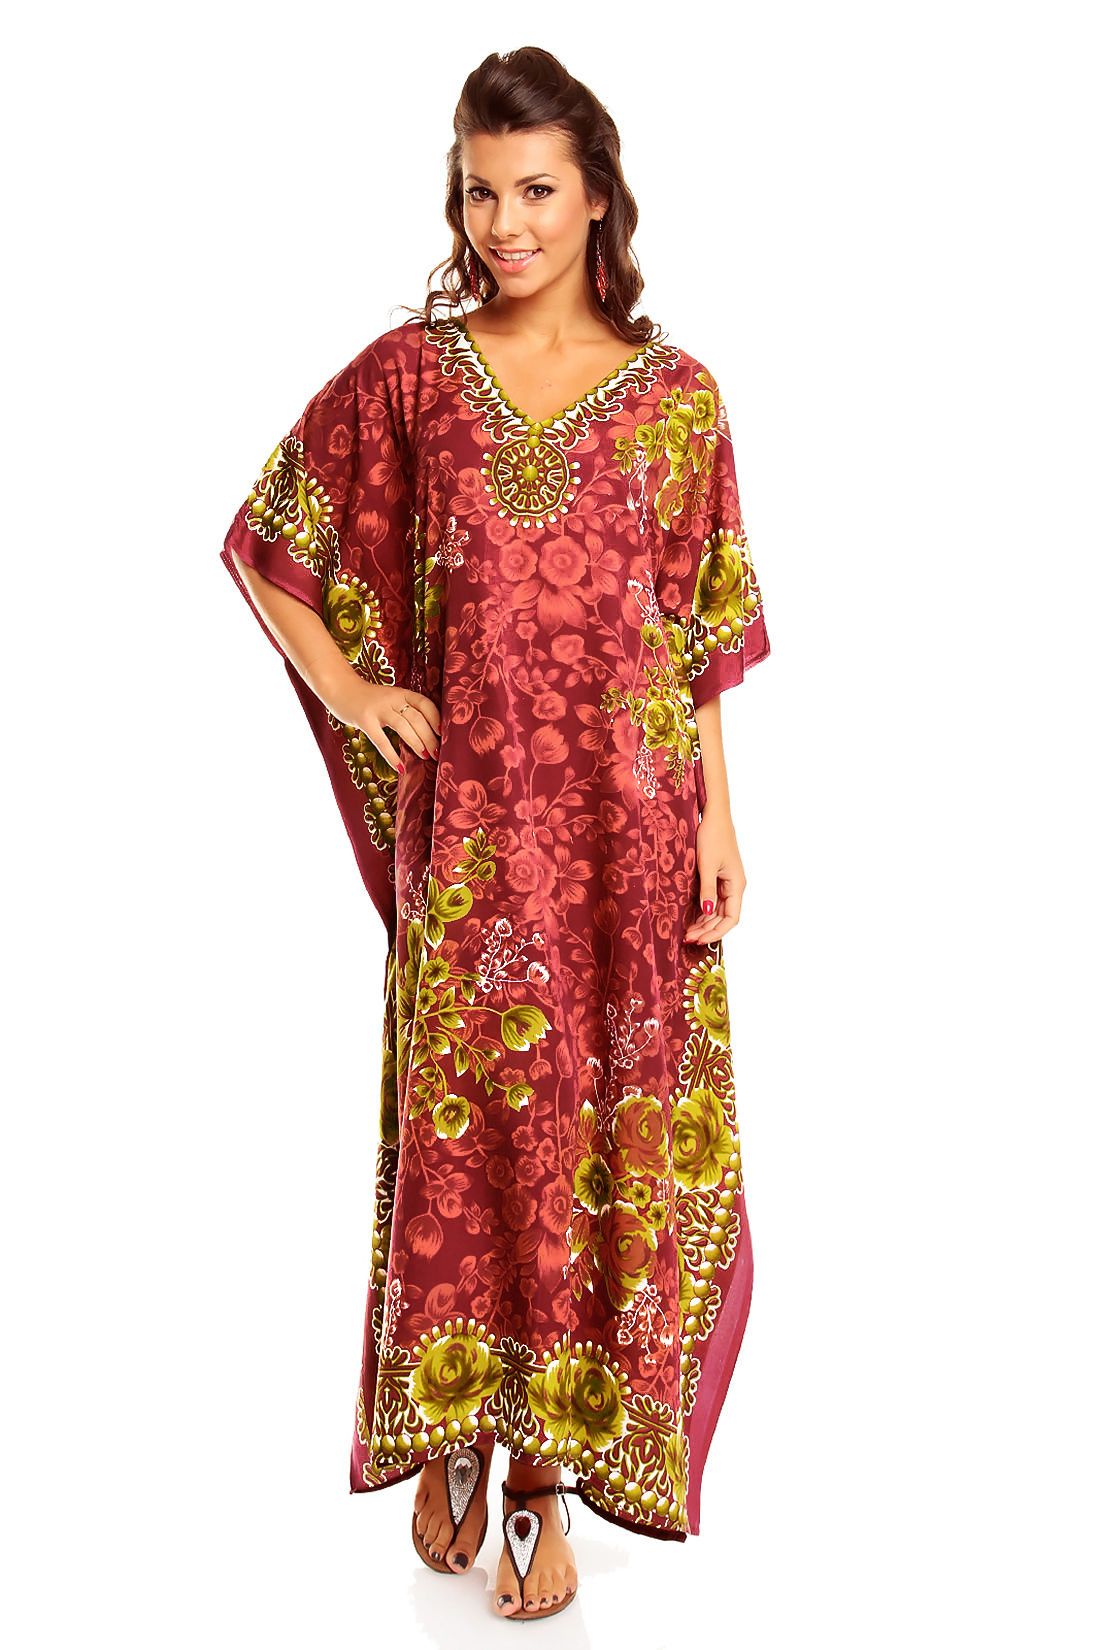 Ladies Full Length Maxi Kaftan Floral Dress in Dark Red